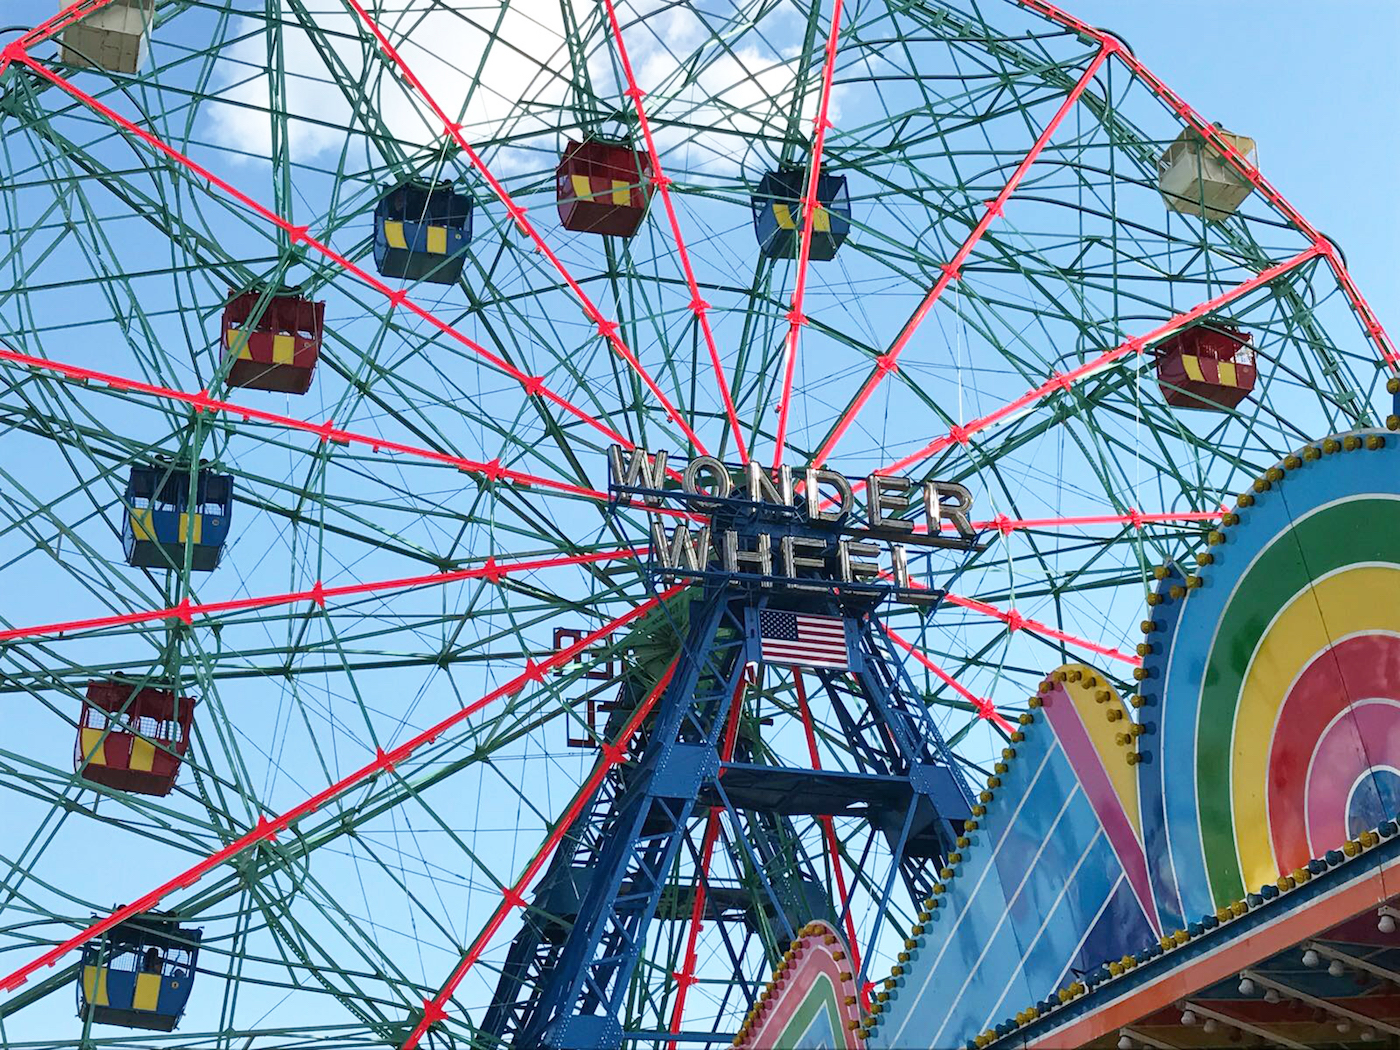 Coney Island New York wonder wheel